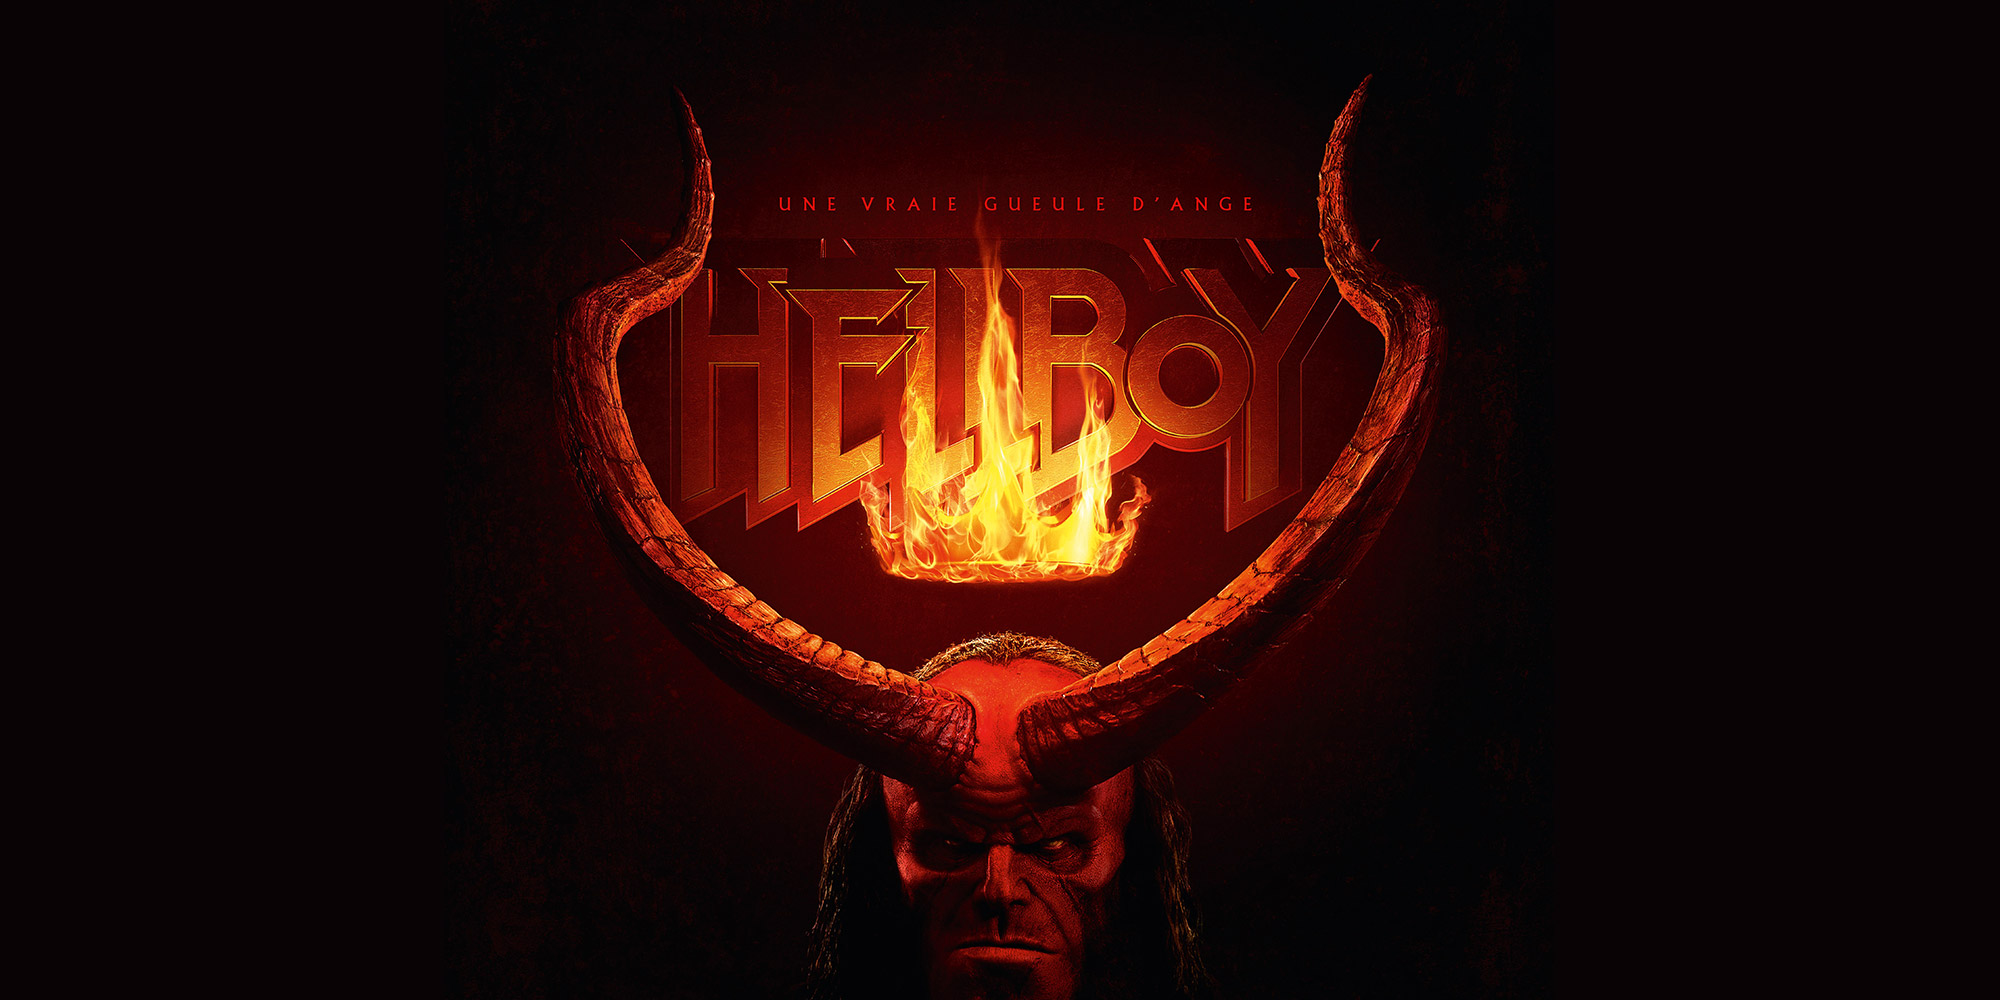  ENFIN le trailer du HellBoy 2019